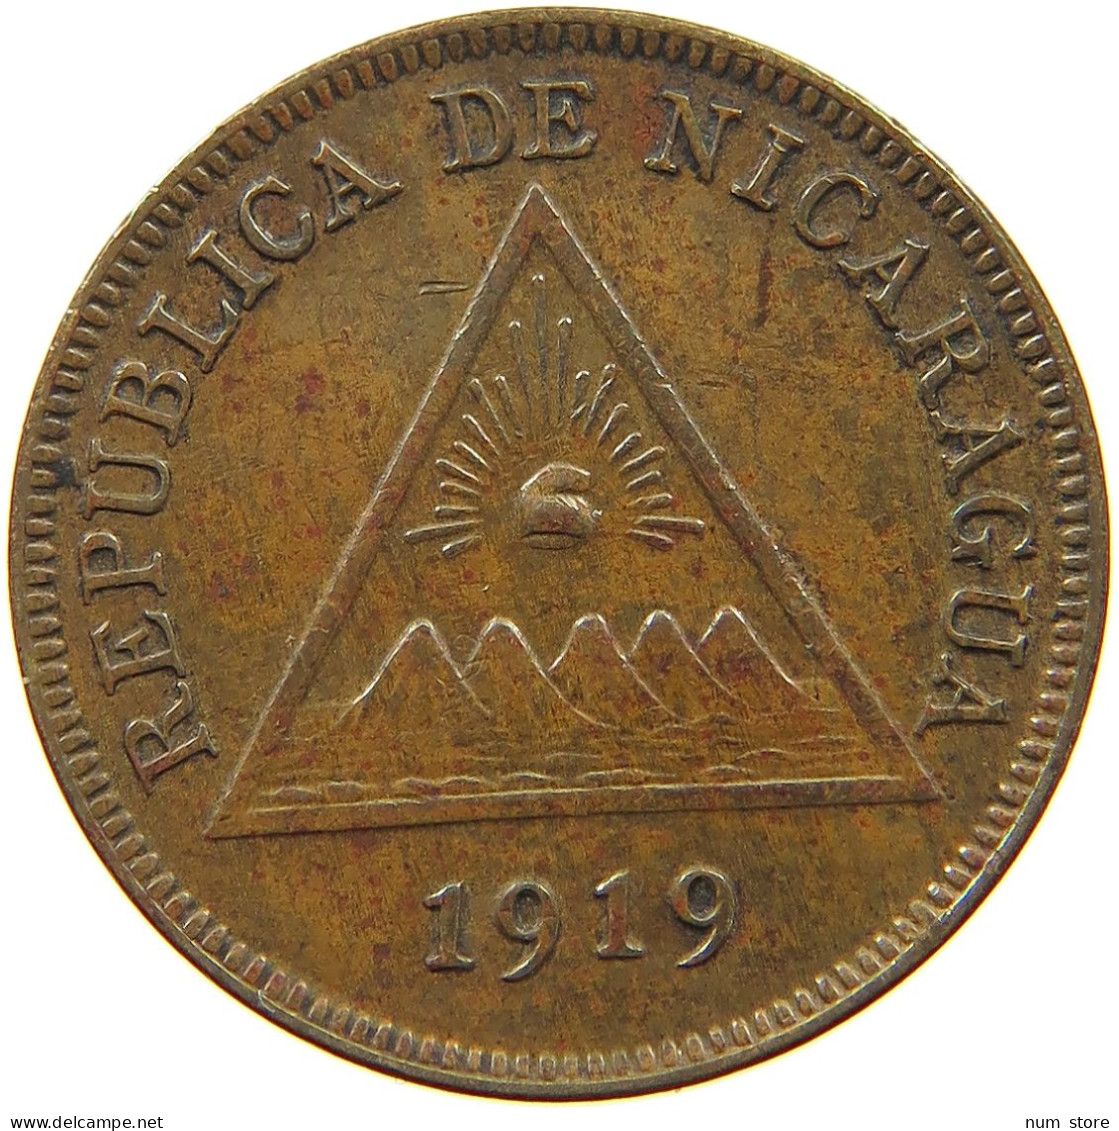 NICARAGUA CENTAVO 1919  #a032 0325 - Nicaragua